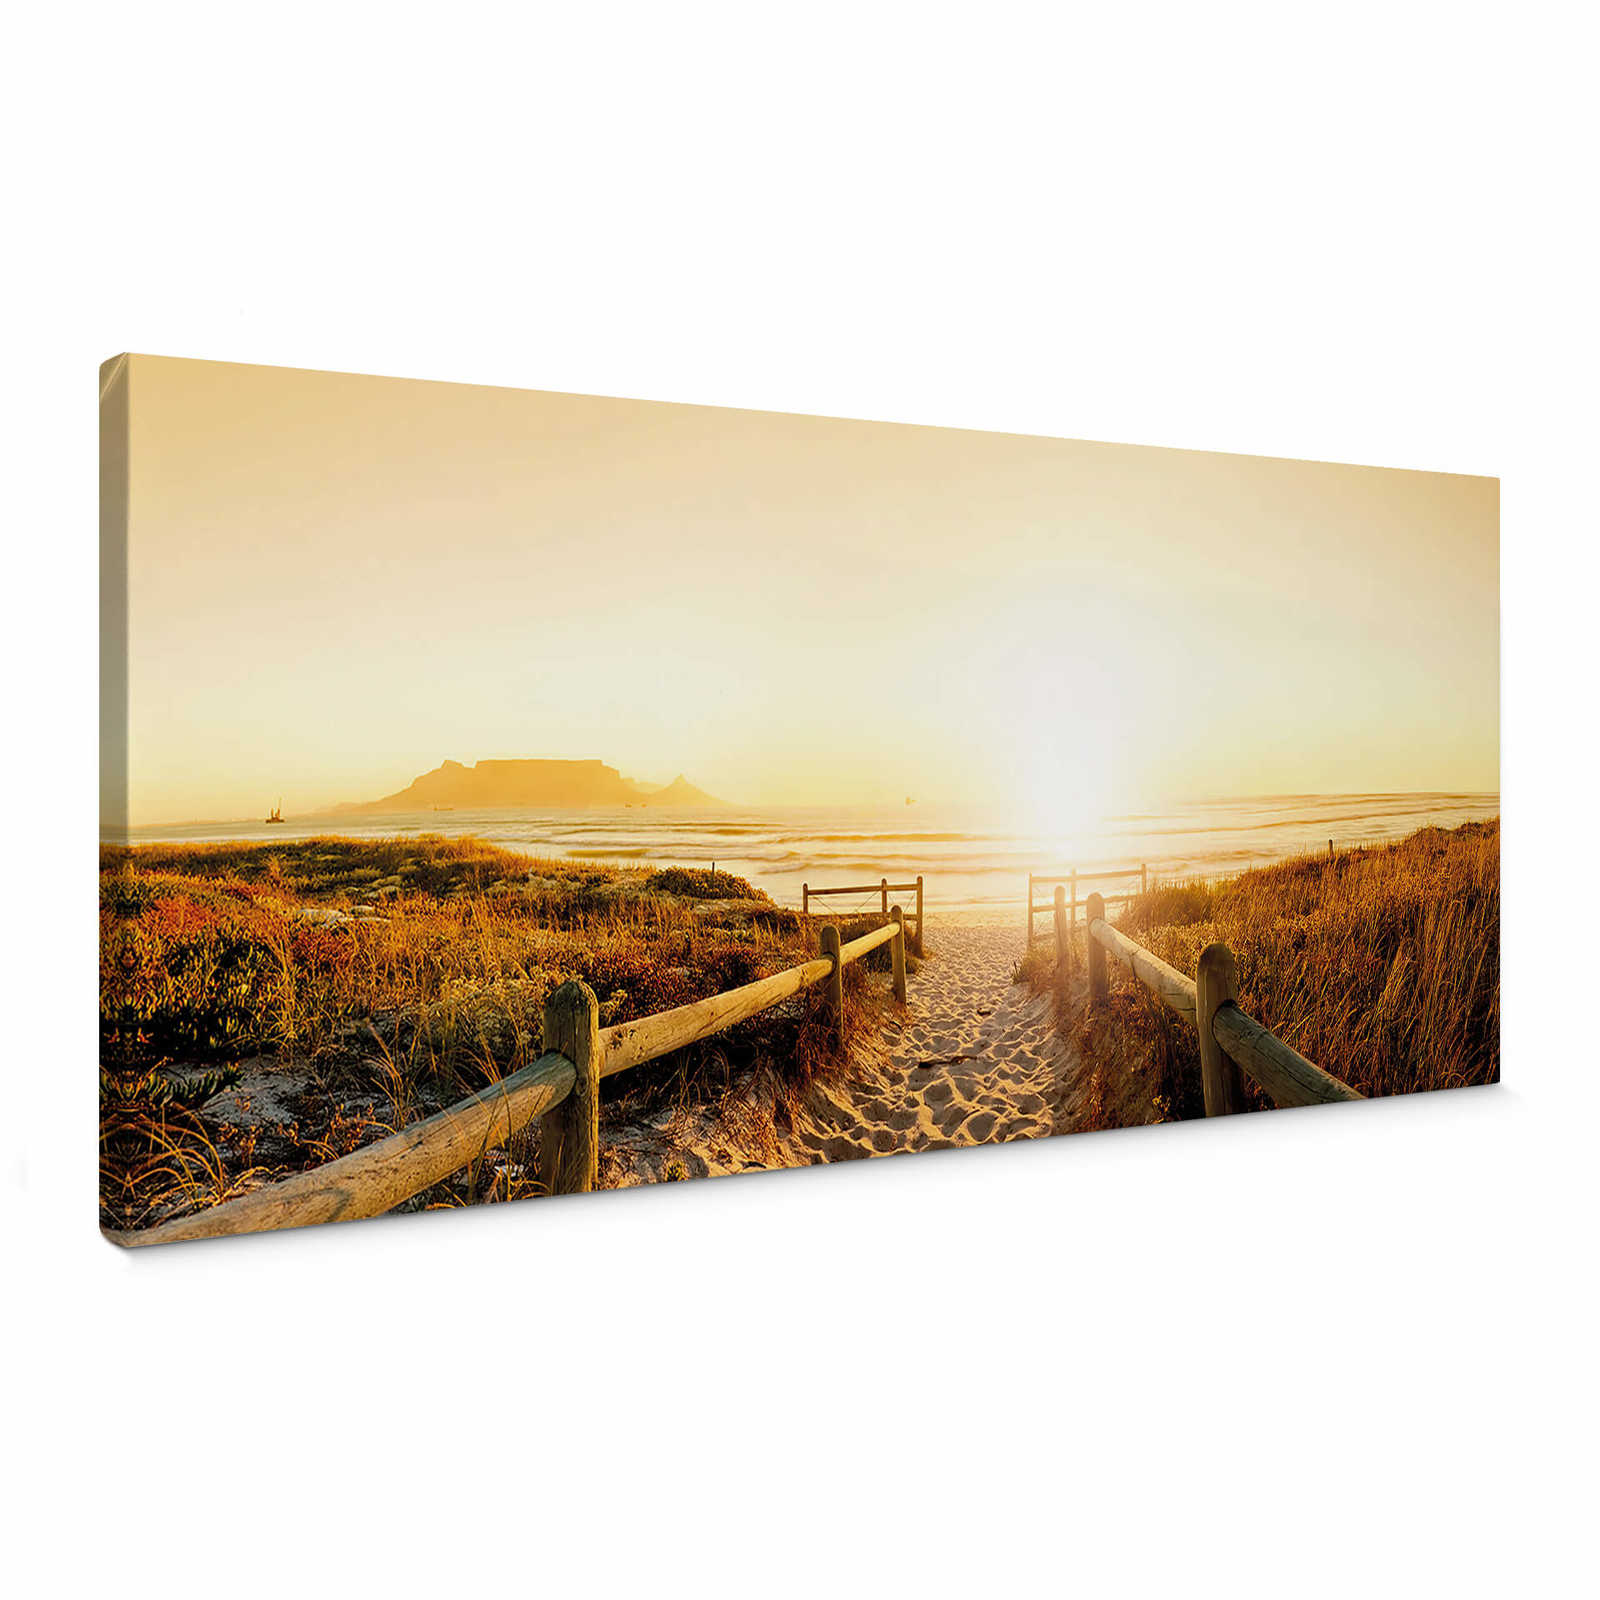         Panorama Keilrahmen vom Sonnenuntergang am Strand in Braun, Orange – 1,00 m x 0,40 m
    